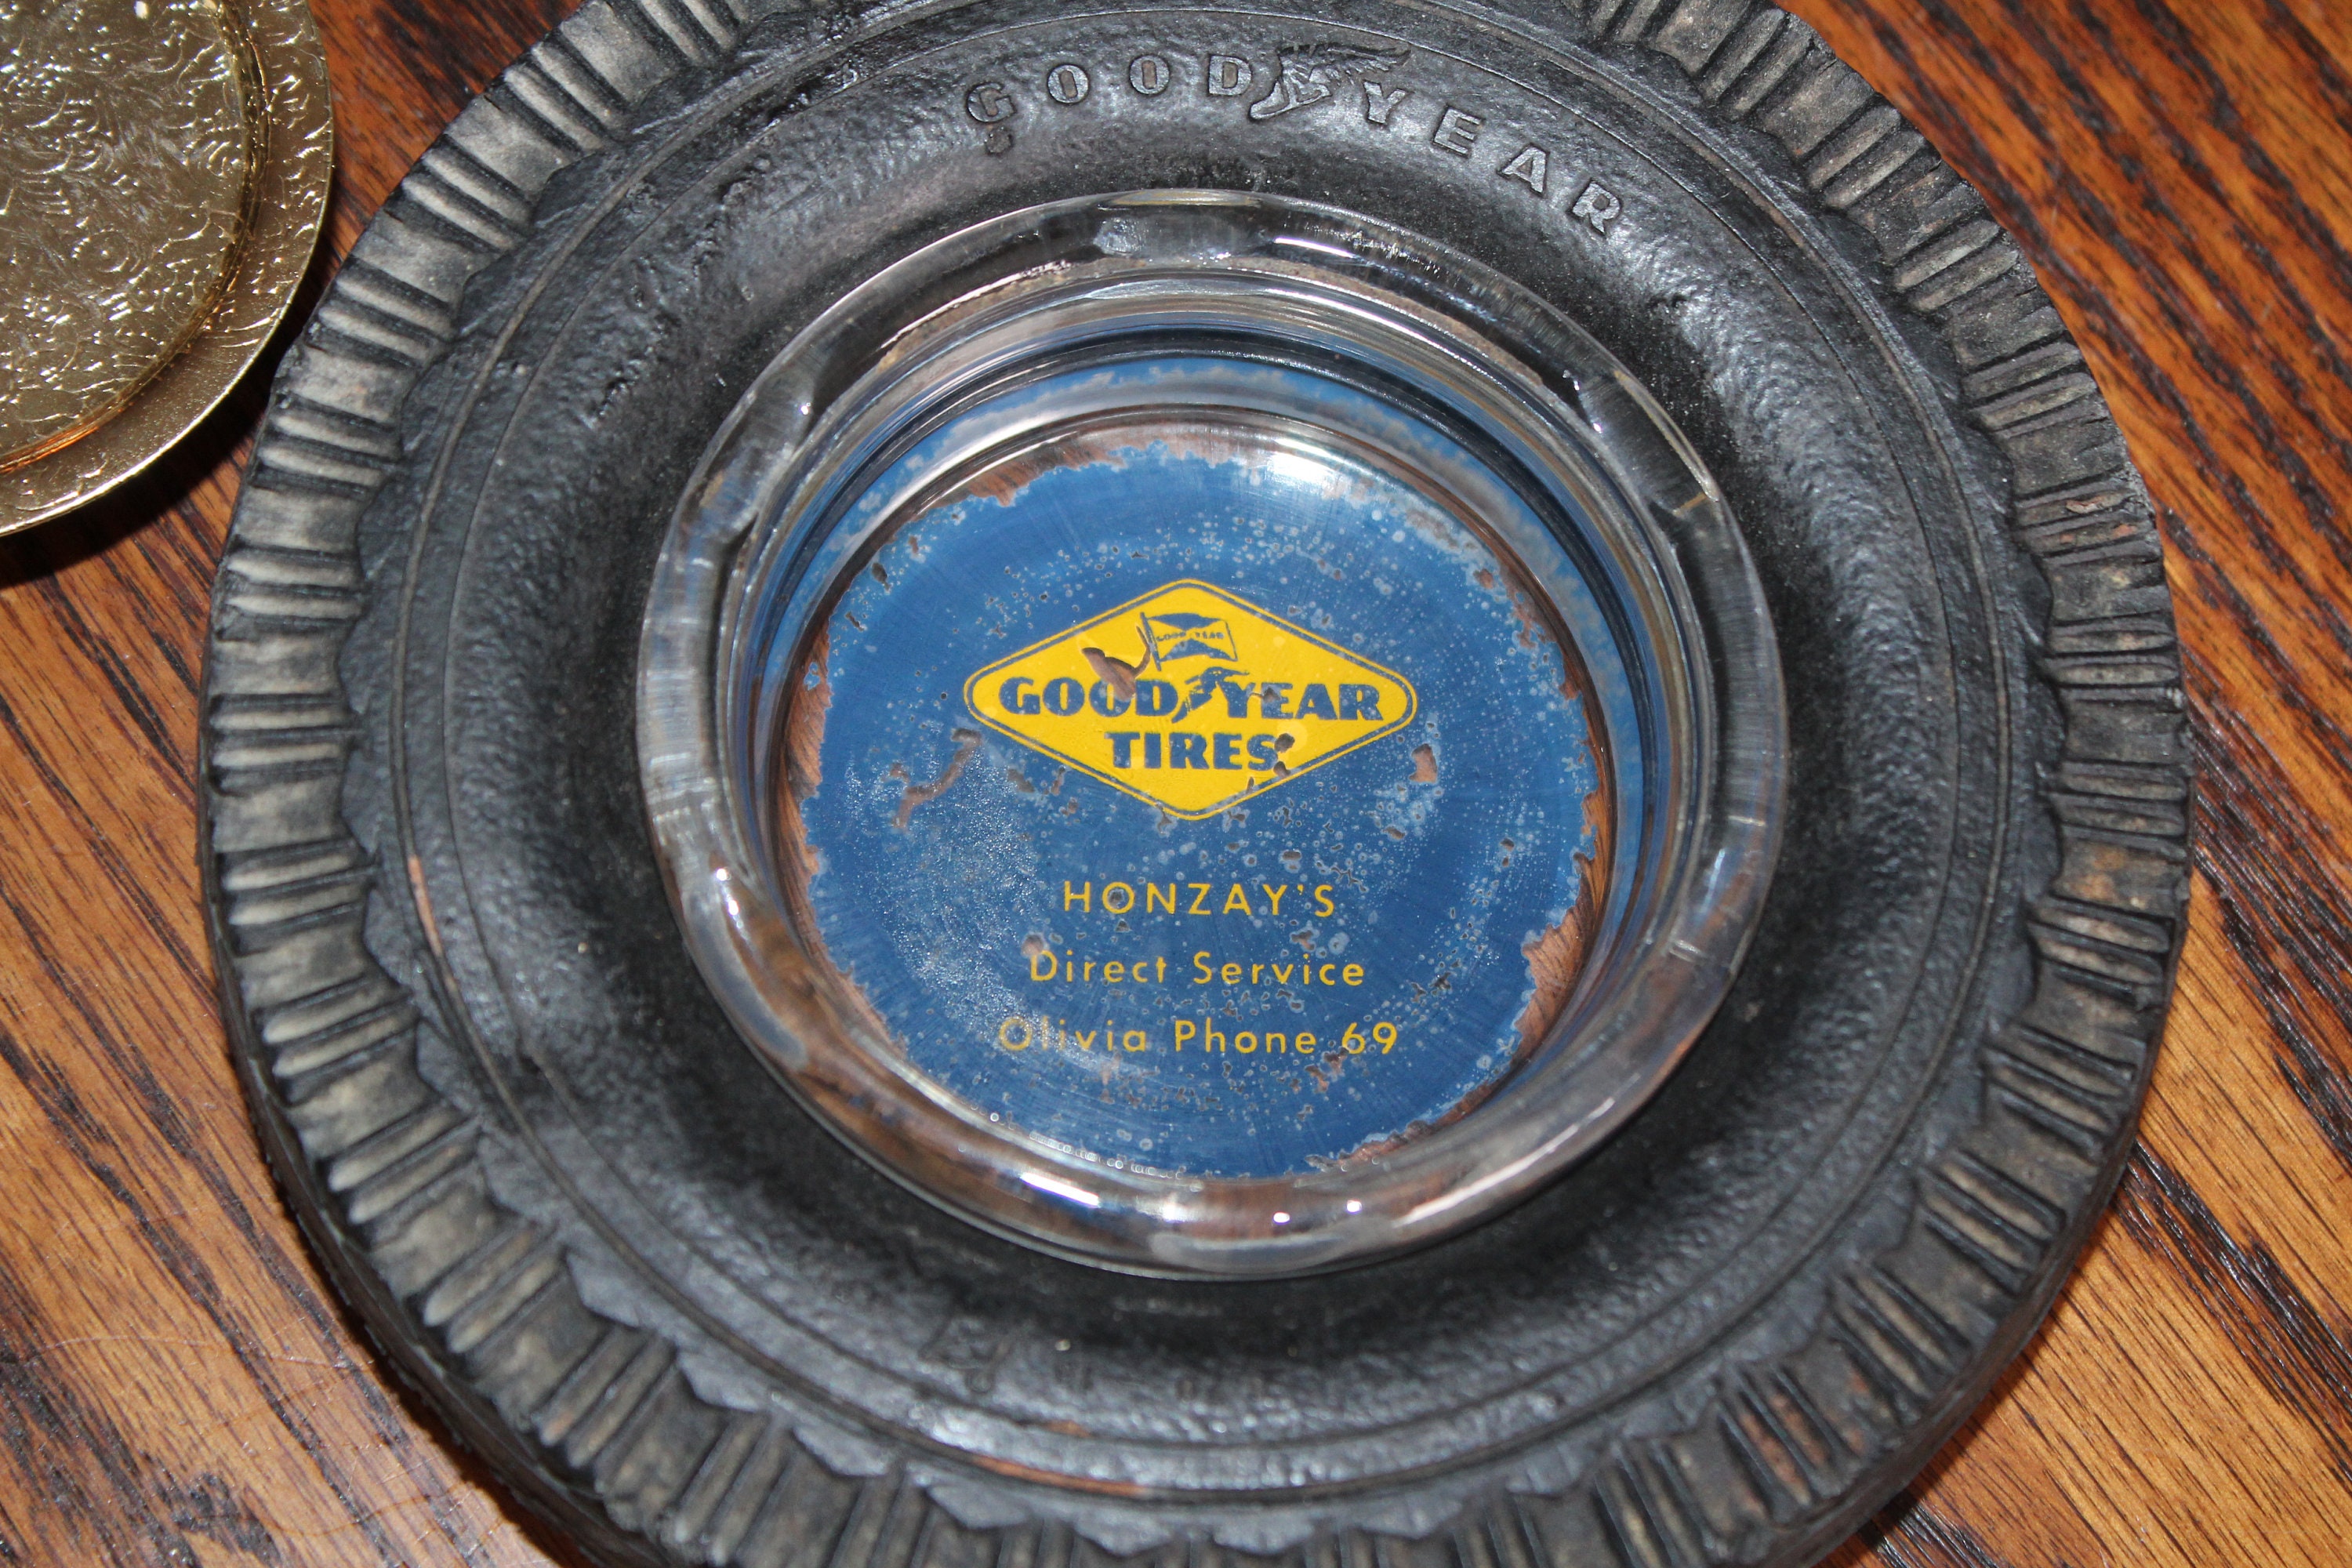 Vintage Goodyear Tire Ashtray Glass Insert Olivia Minnesota